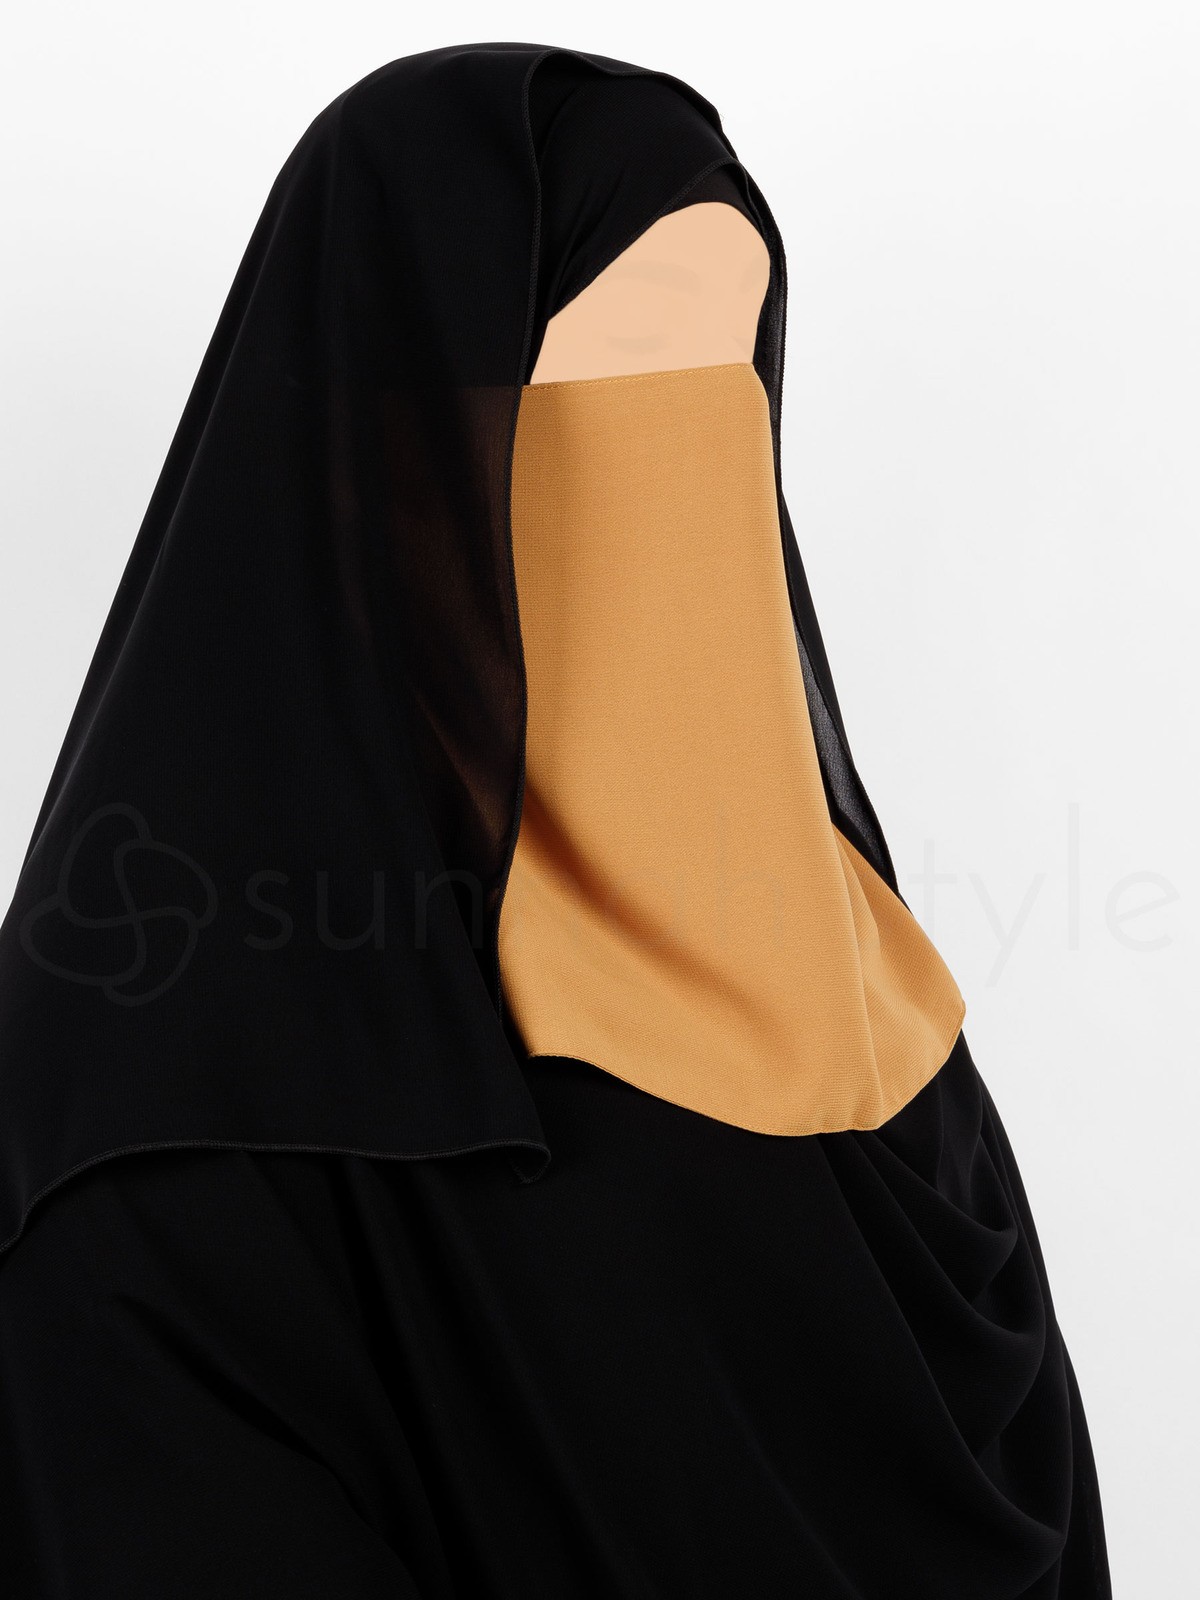 Sunnah Style - Elastic Half Niqab (Honey)